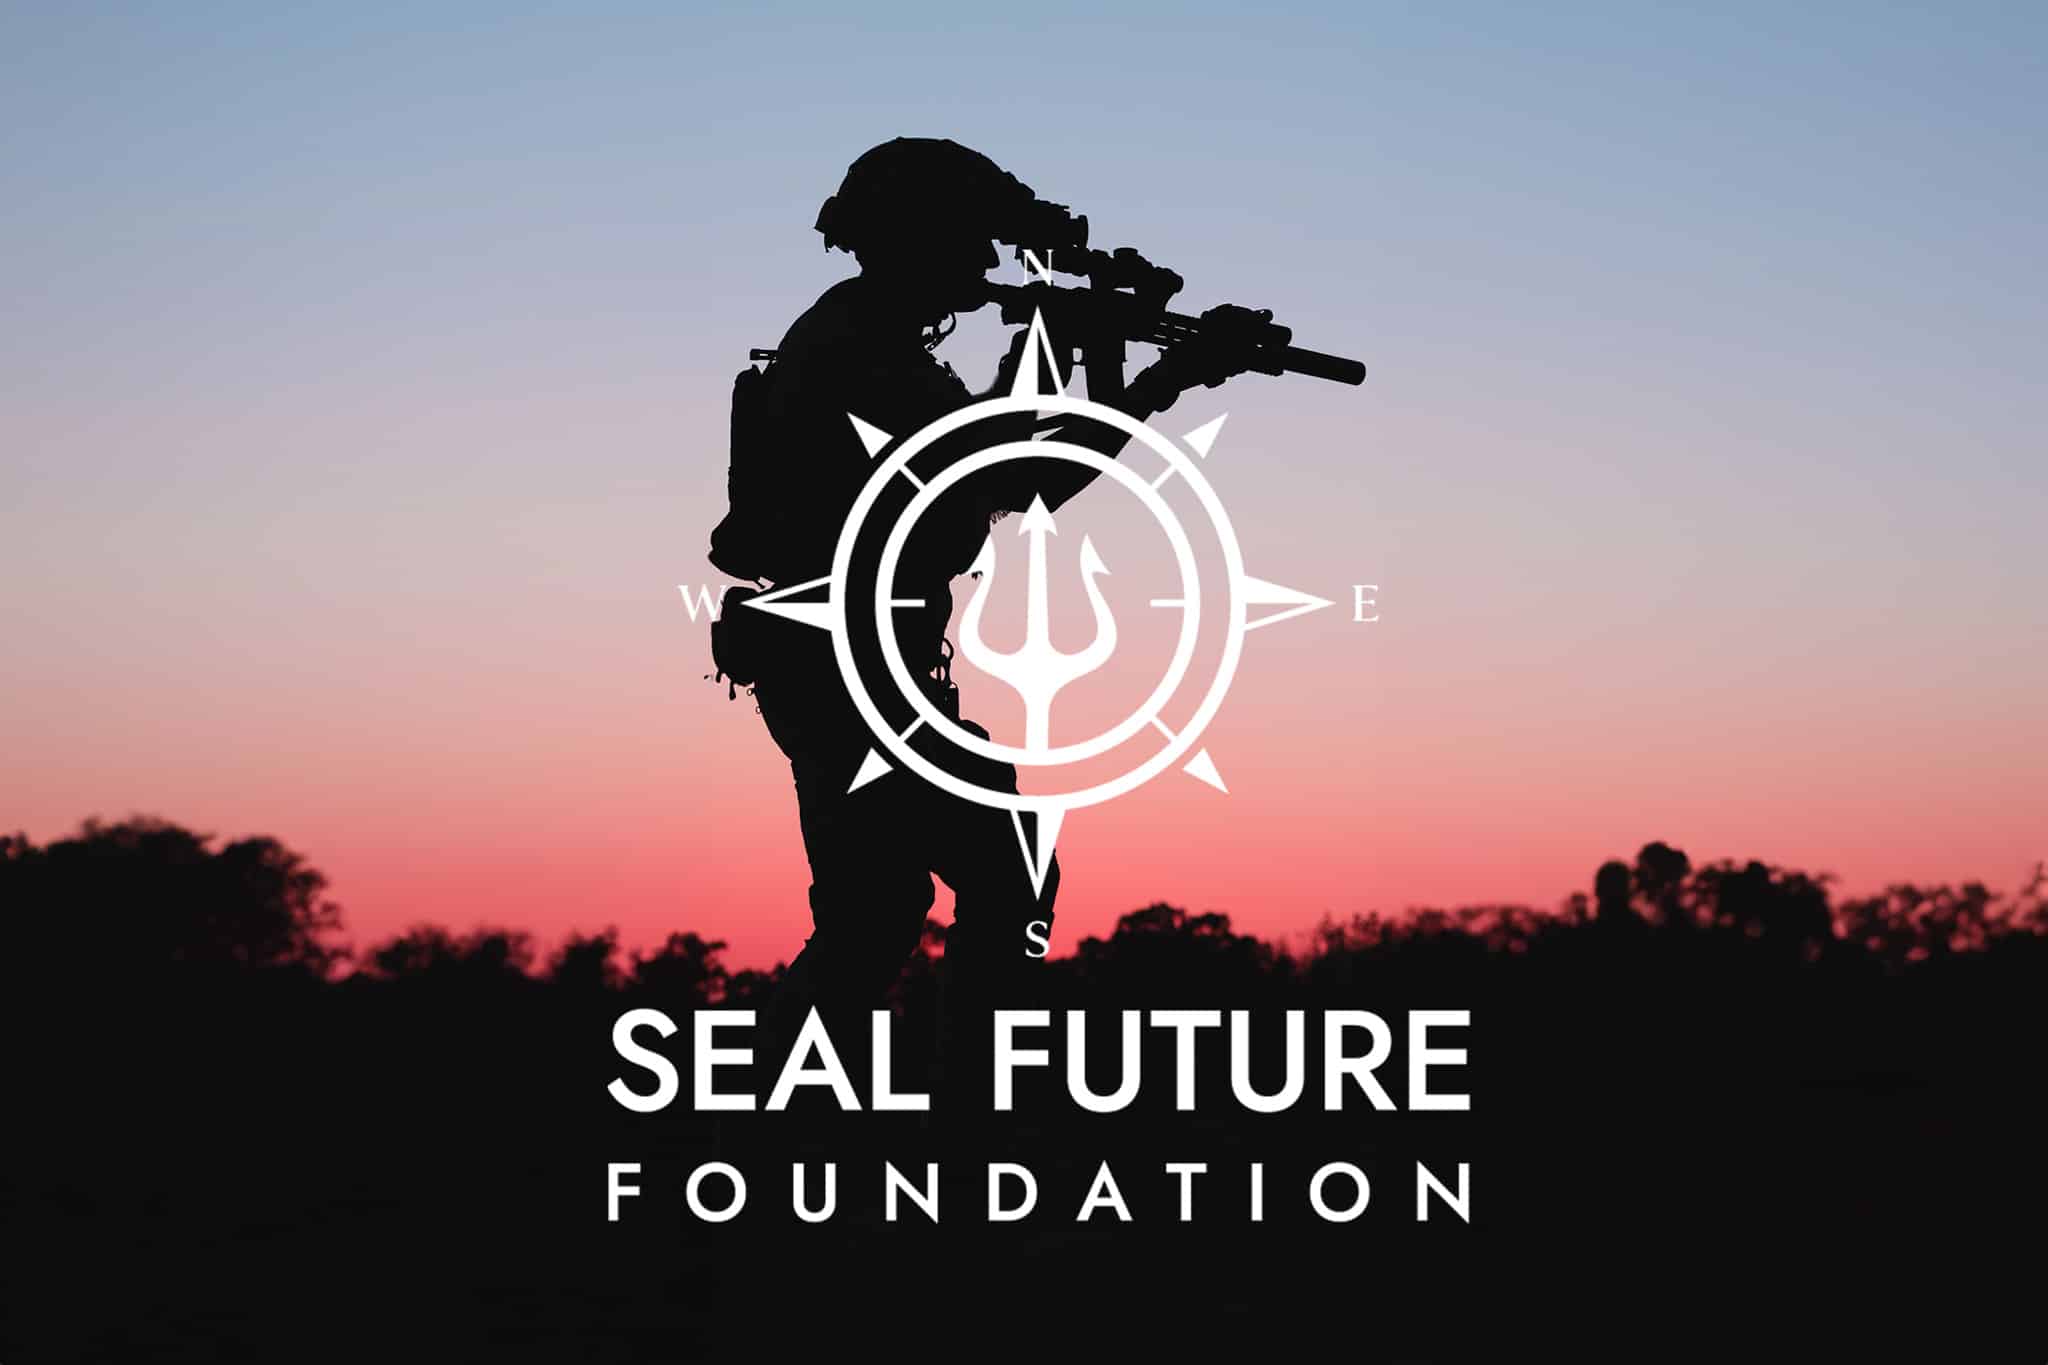 https://cityarsenal.com/product/seal-future-foundation-donations/